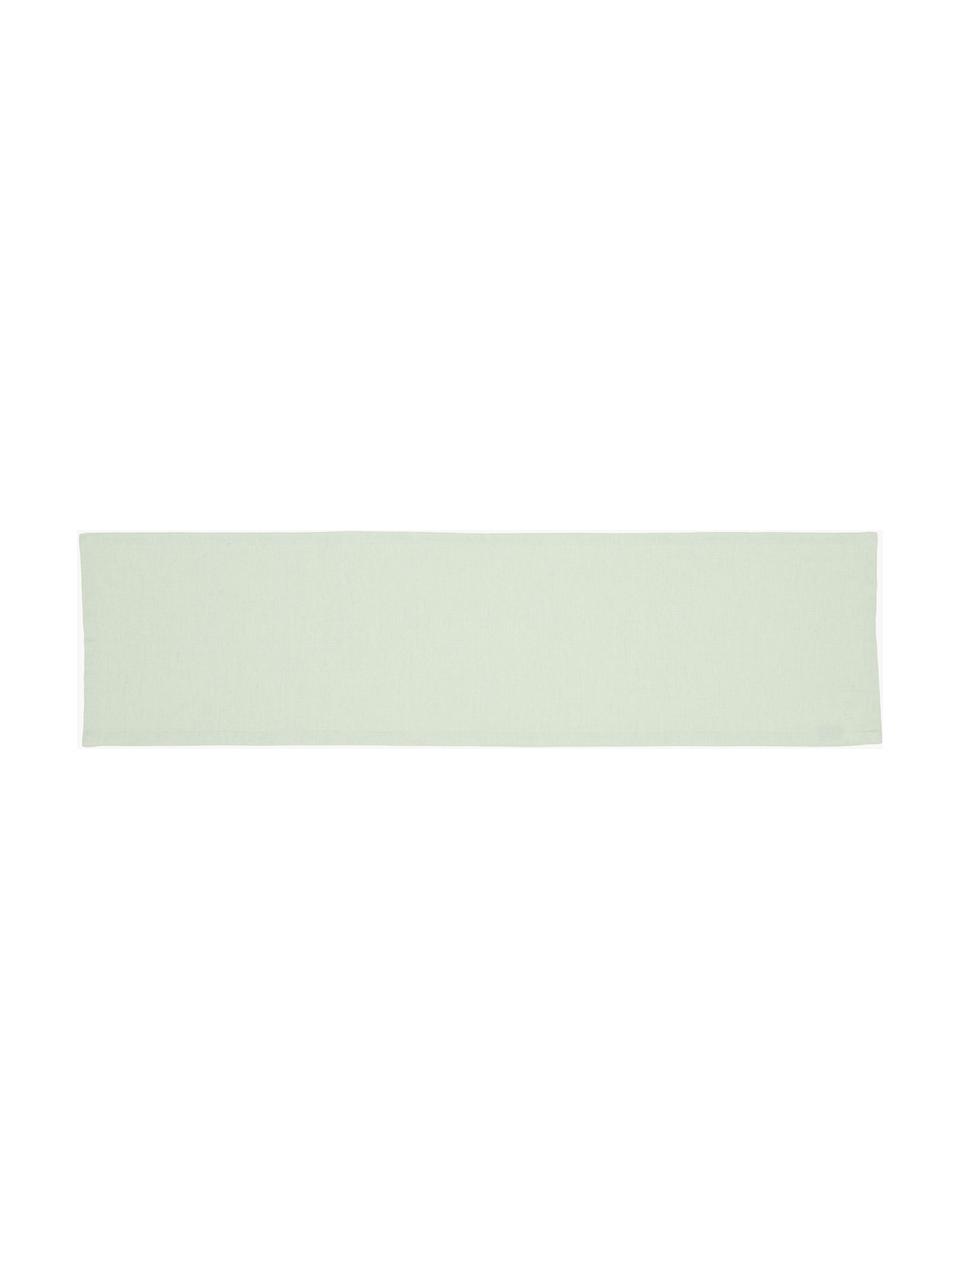 Chemin de table Riva, 55 % coton, 45 % polyester

Le matériau est certifié STANDARD 100 OEKO-TEX®, 14.HIN.40536, HOHENSTEIN HTTI, Vert sauge, larg. 40 x long. 150 cm